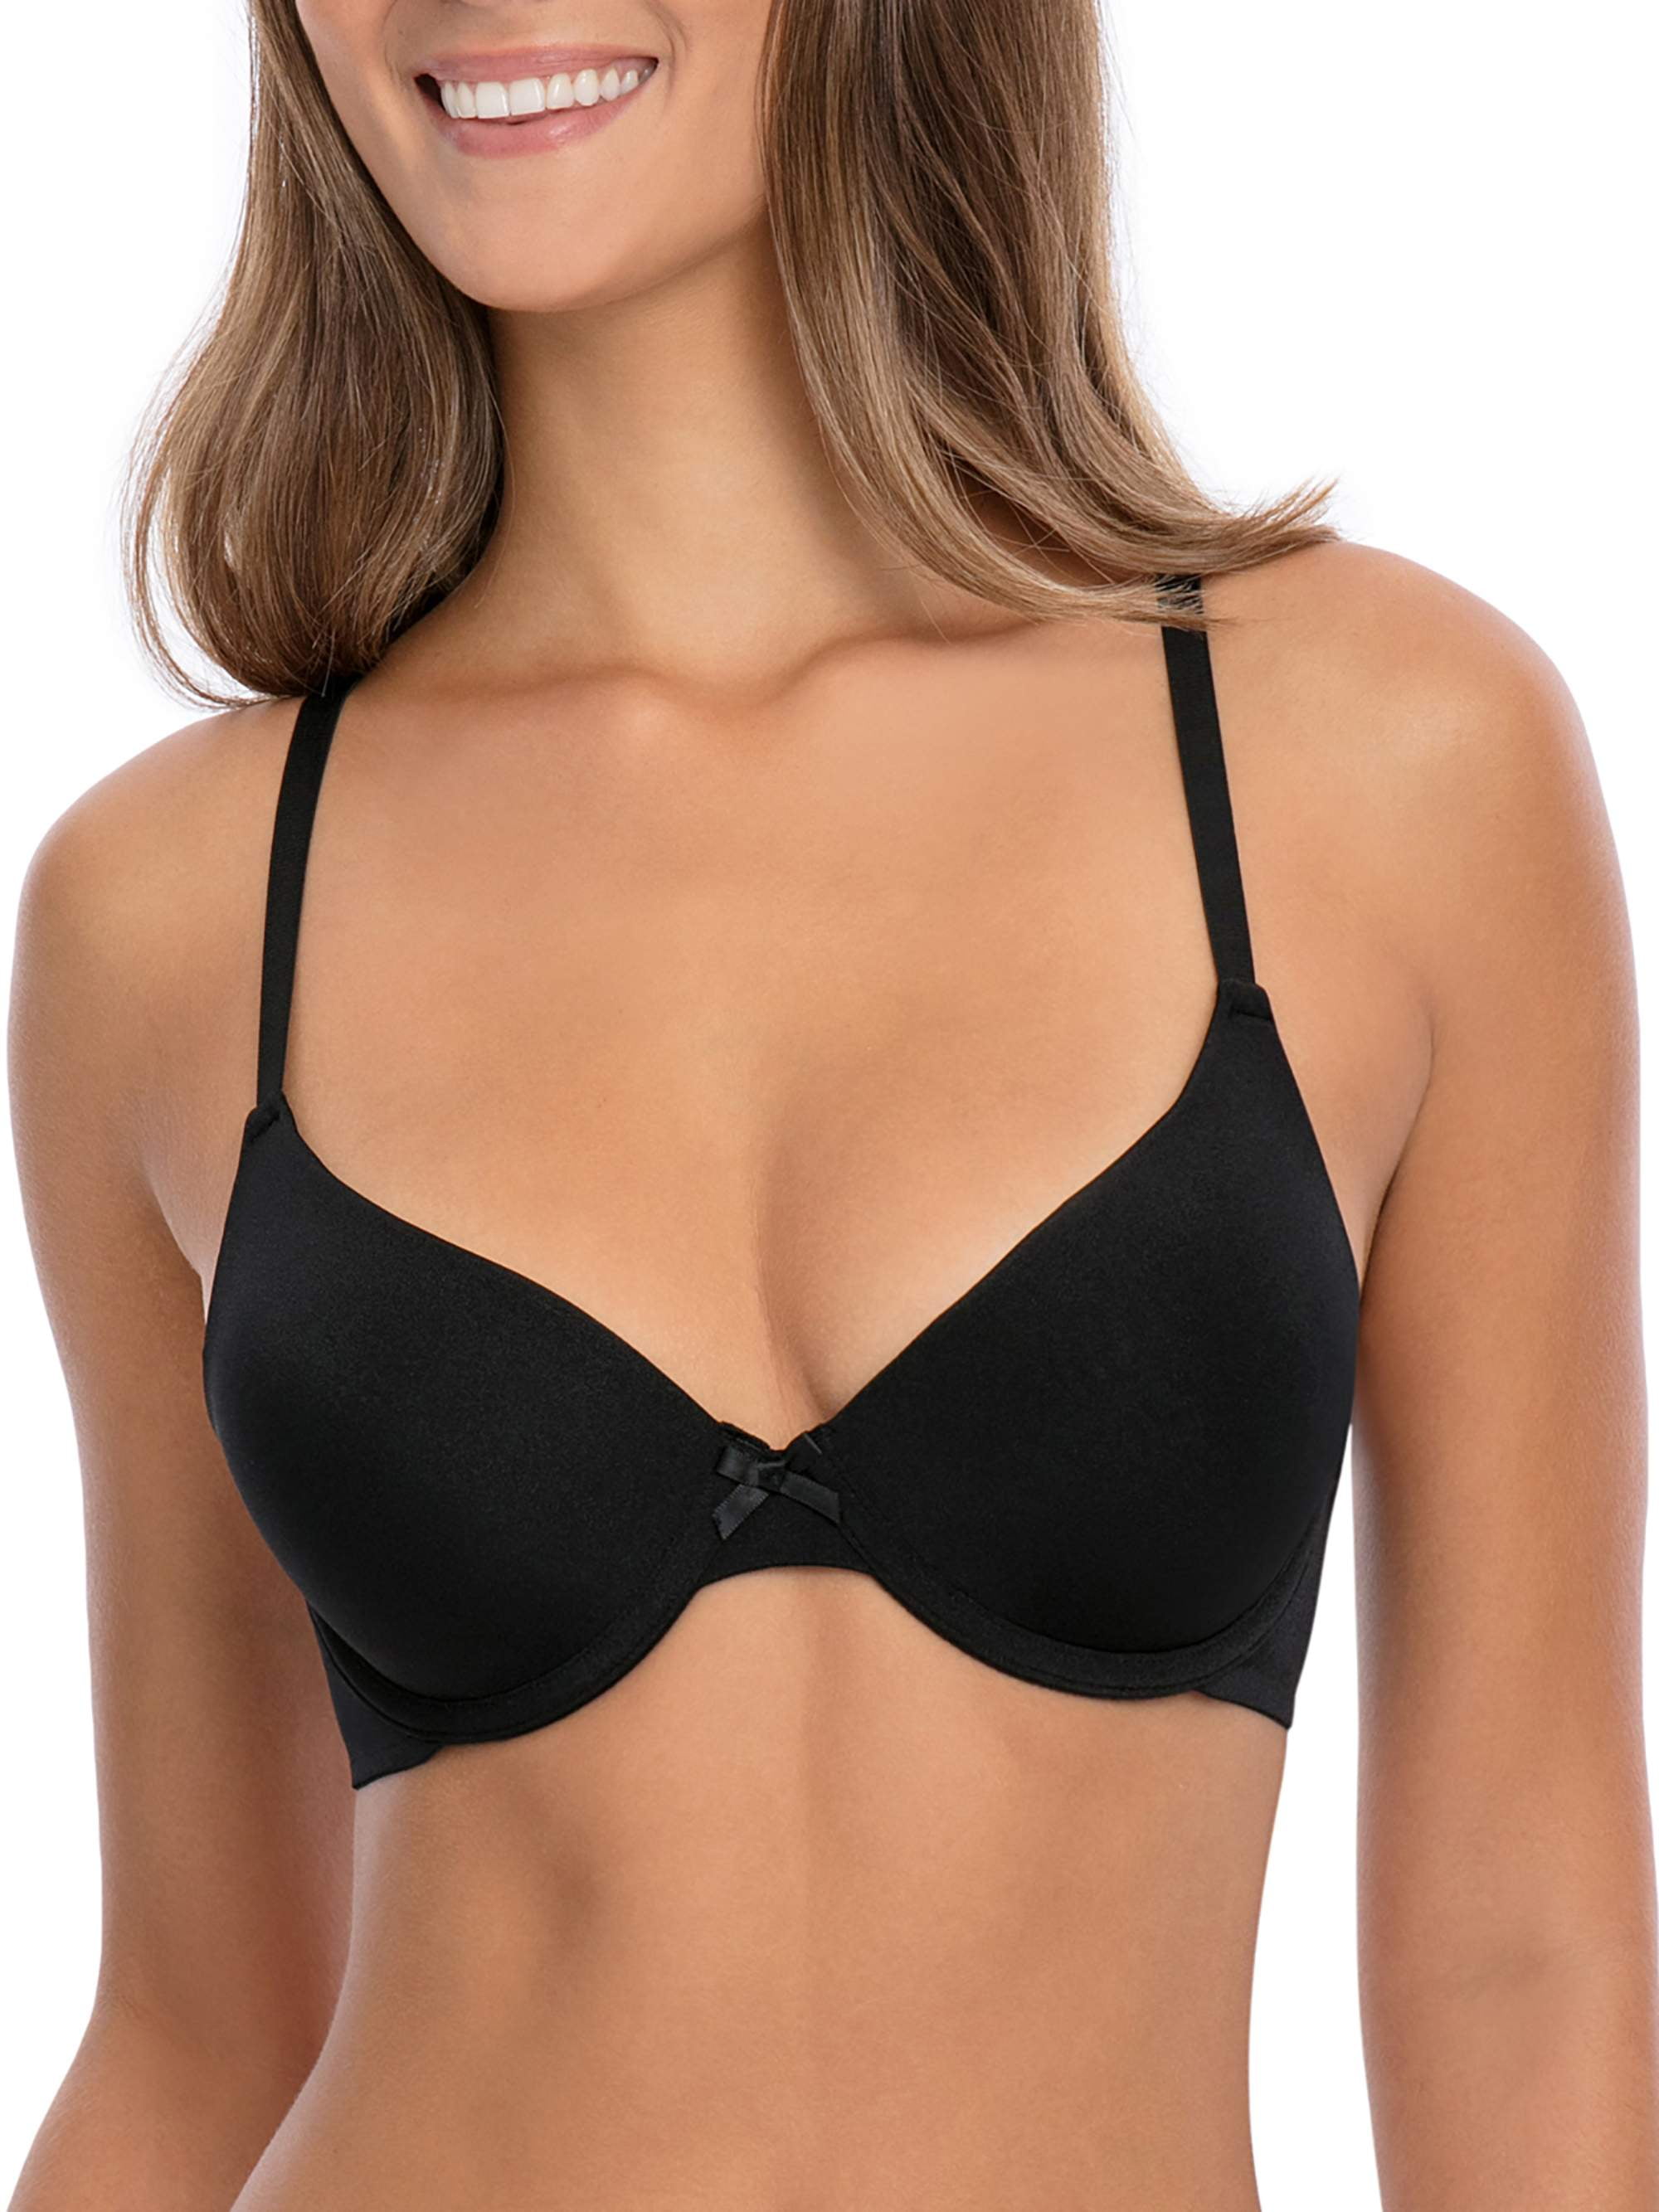 Women's Secret Treasure t-shirt bra Full Figure nude tan color size 42C New